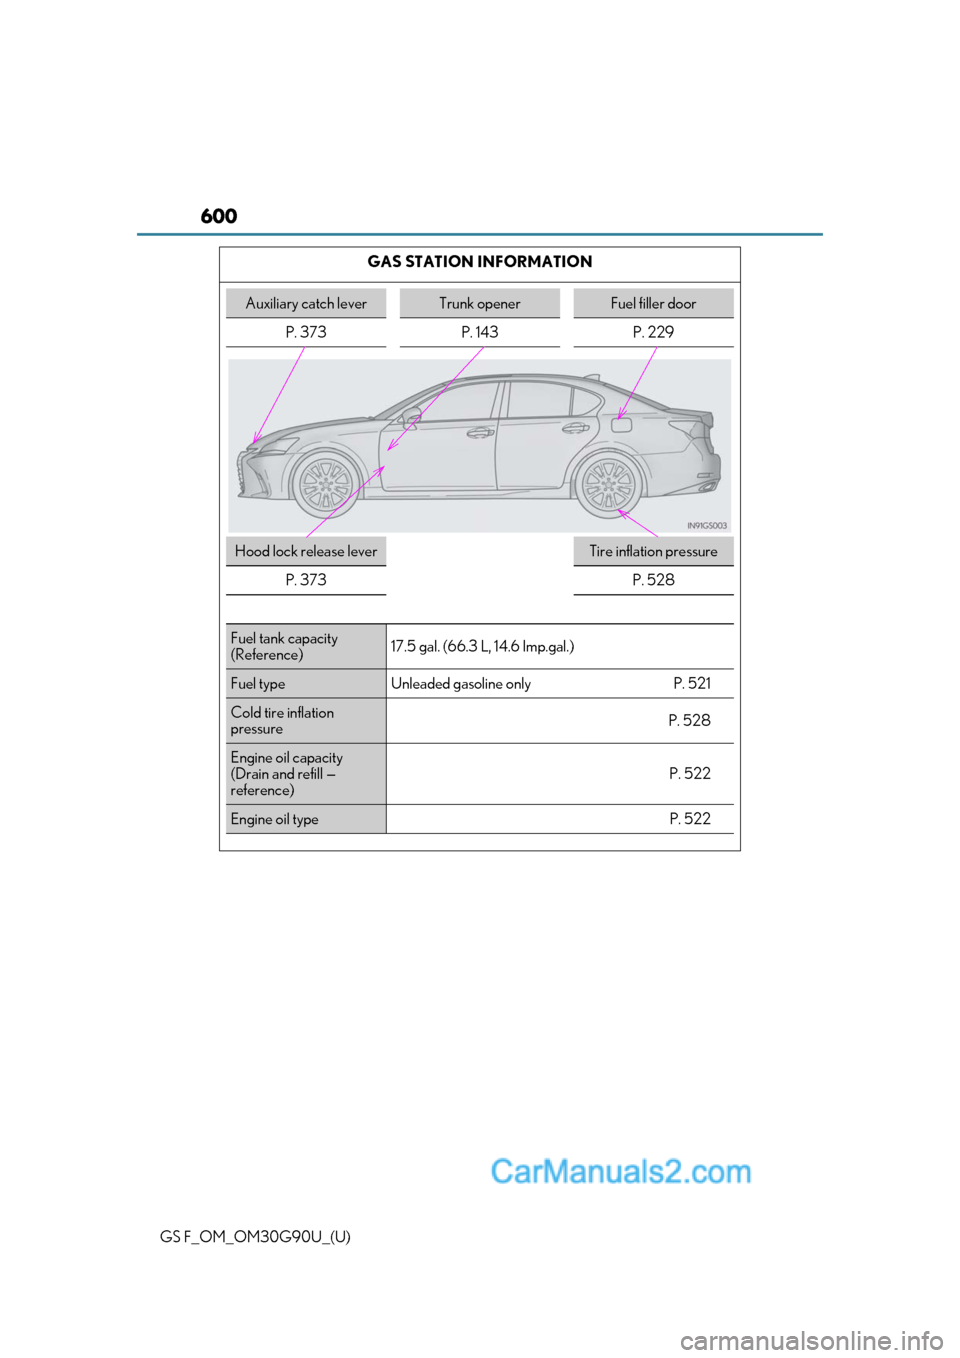 Lexus GS F 2019  Owners Manuals 600
GS F_OM_OM30G90U_(U)GAS STATION INFORMATION
Auxiliary catch leverTrunk openerFuel filler door
P. 373 P. 143 P. 229
Hood lock release leverTire inflation pressure
P. 373
P. 528
Fuel tank capacity
(